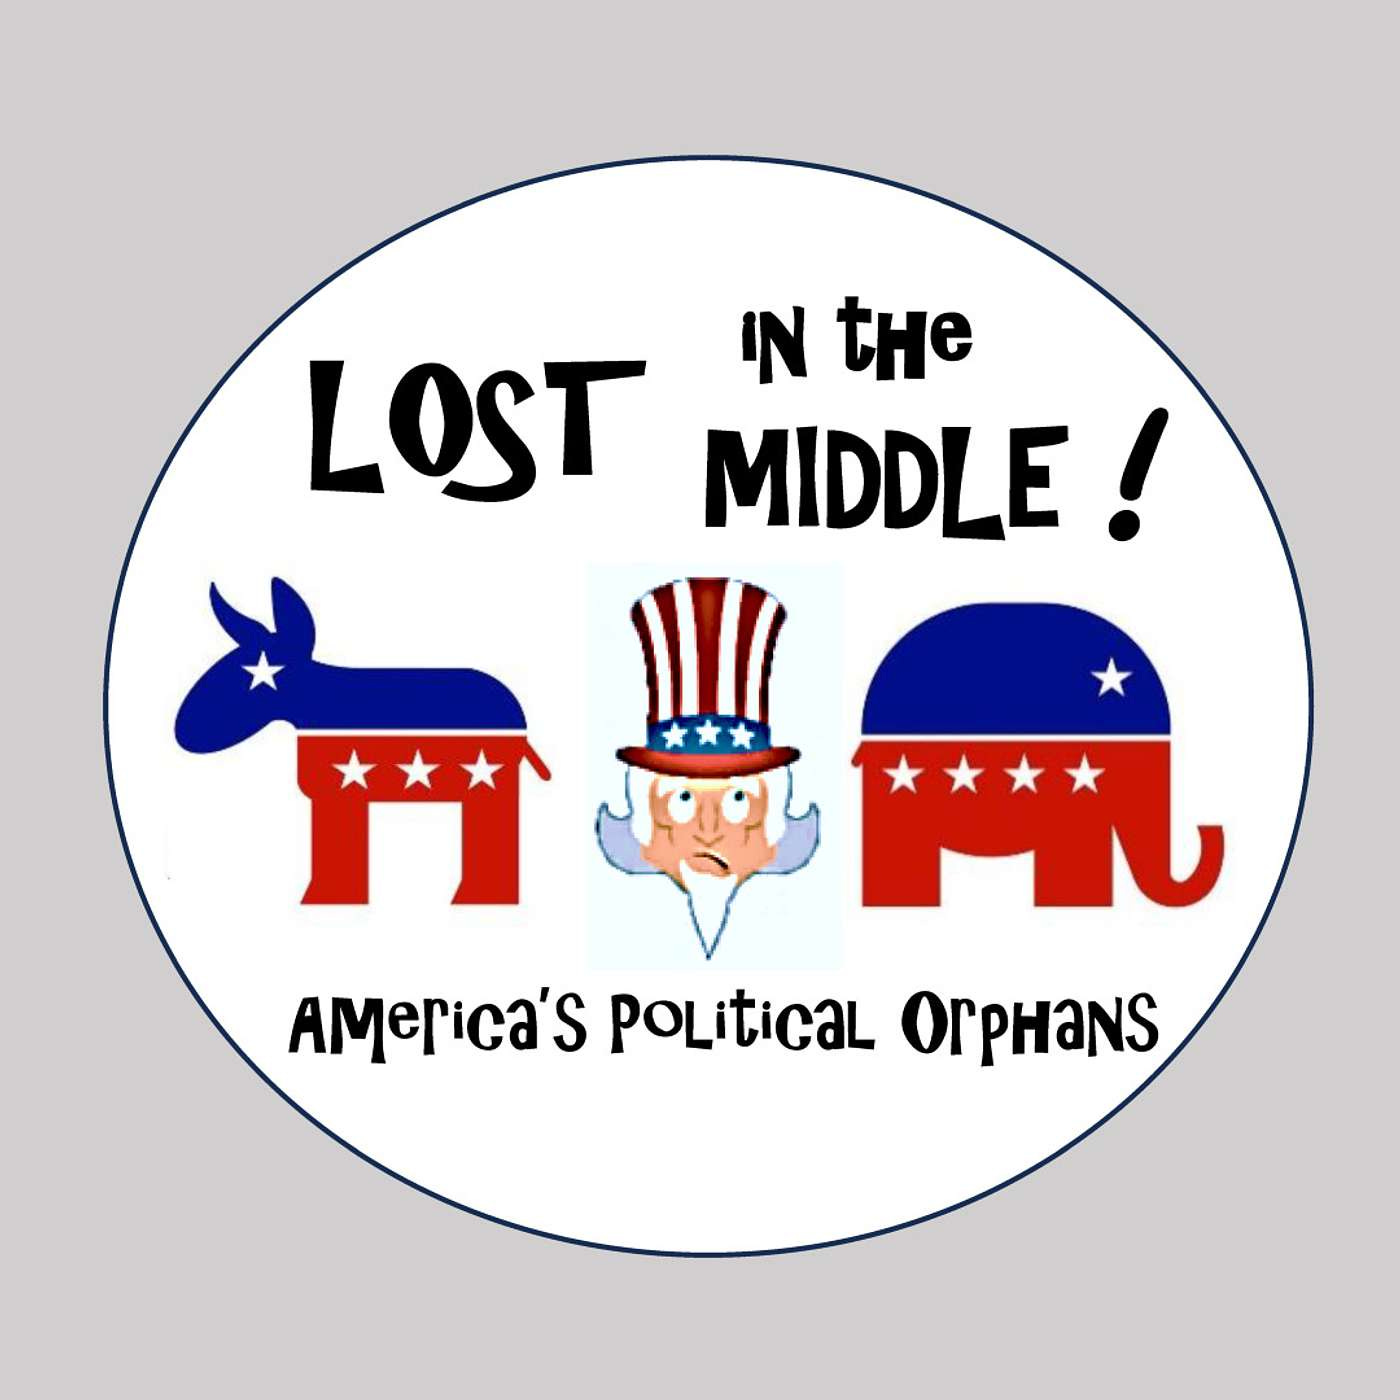 America’s bewildered 71 million political orphans